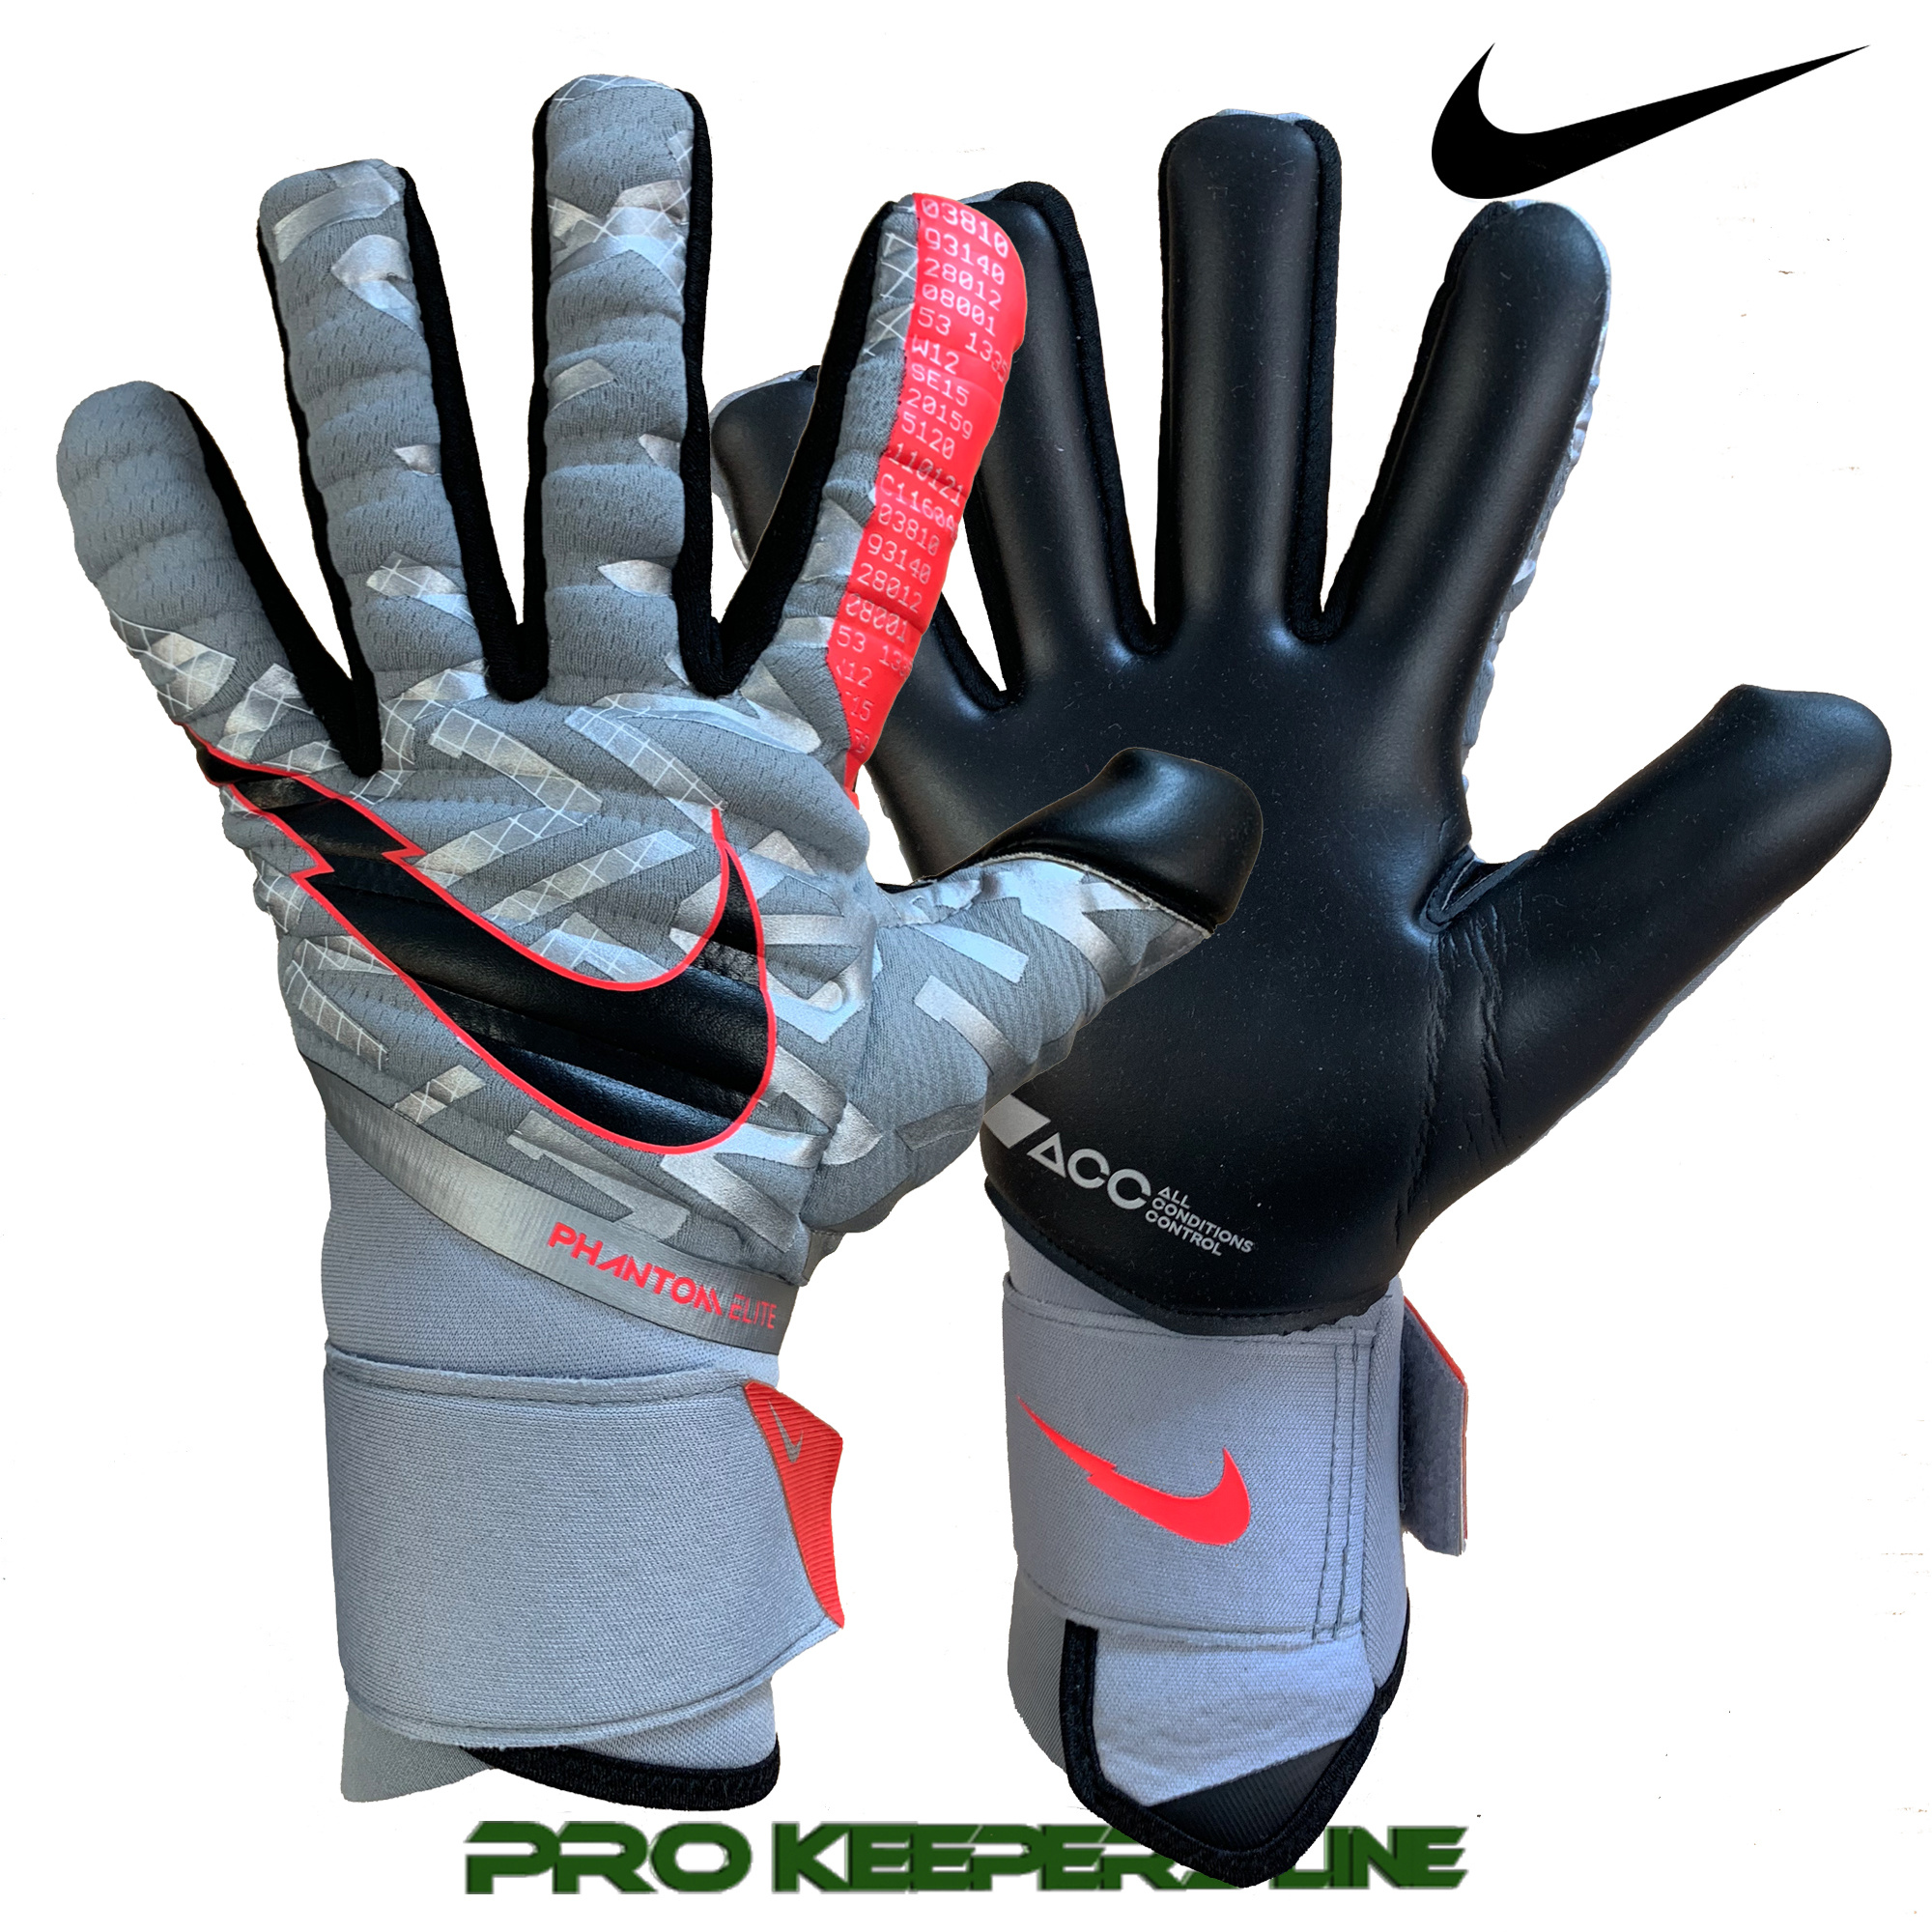 nike goalkeeper gloves size 5